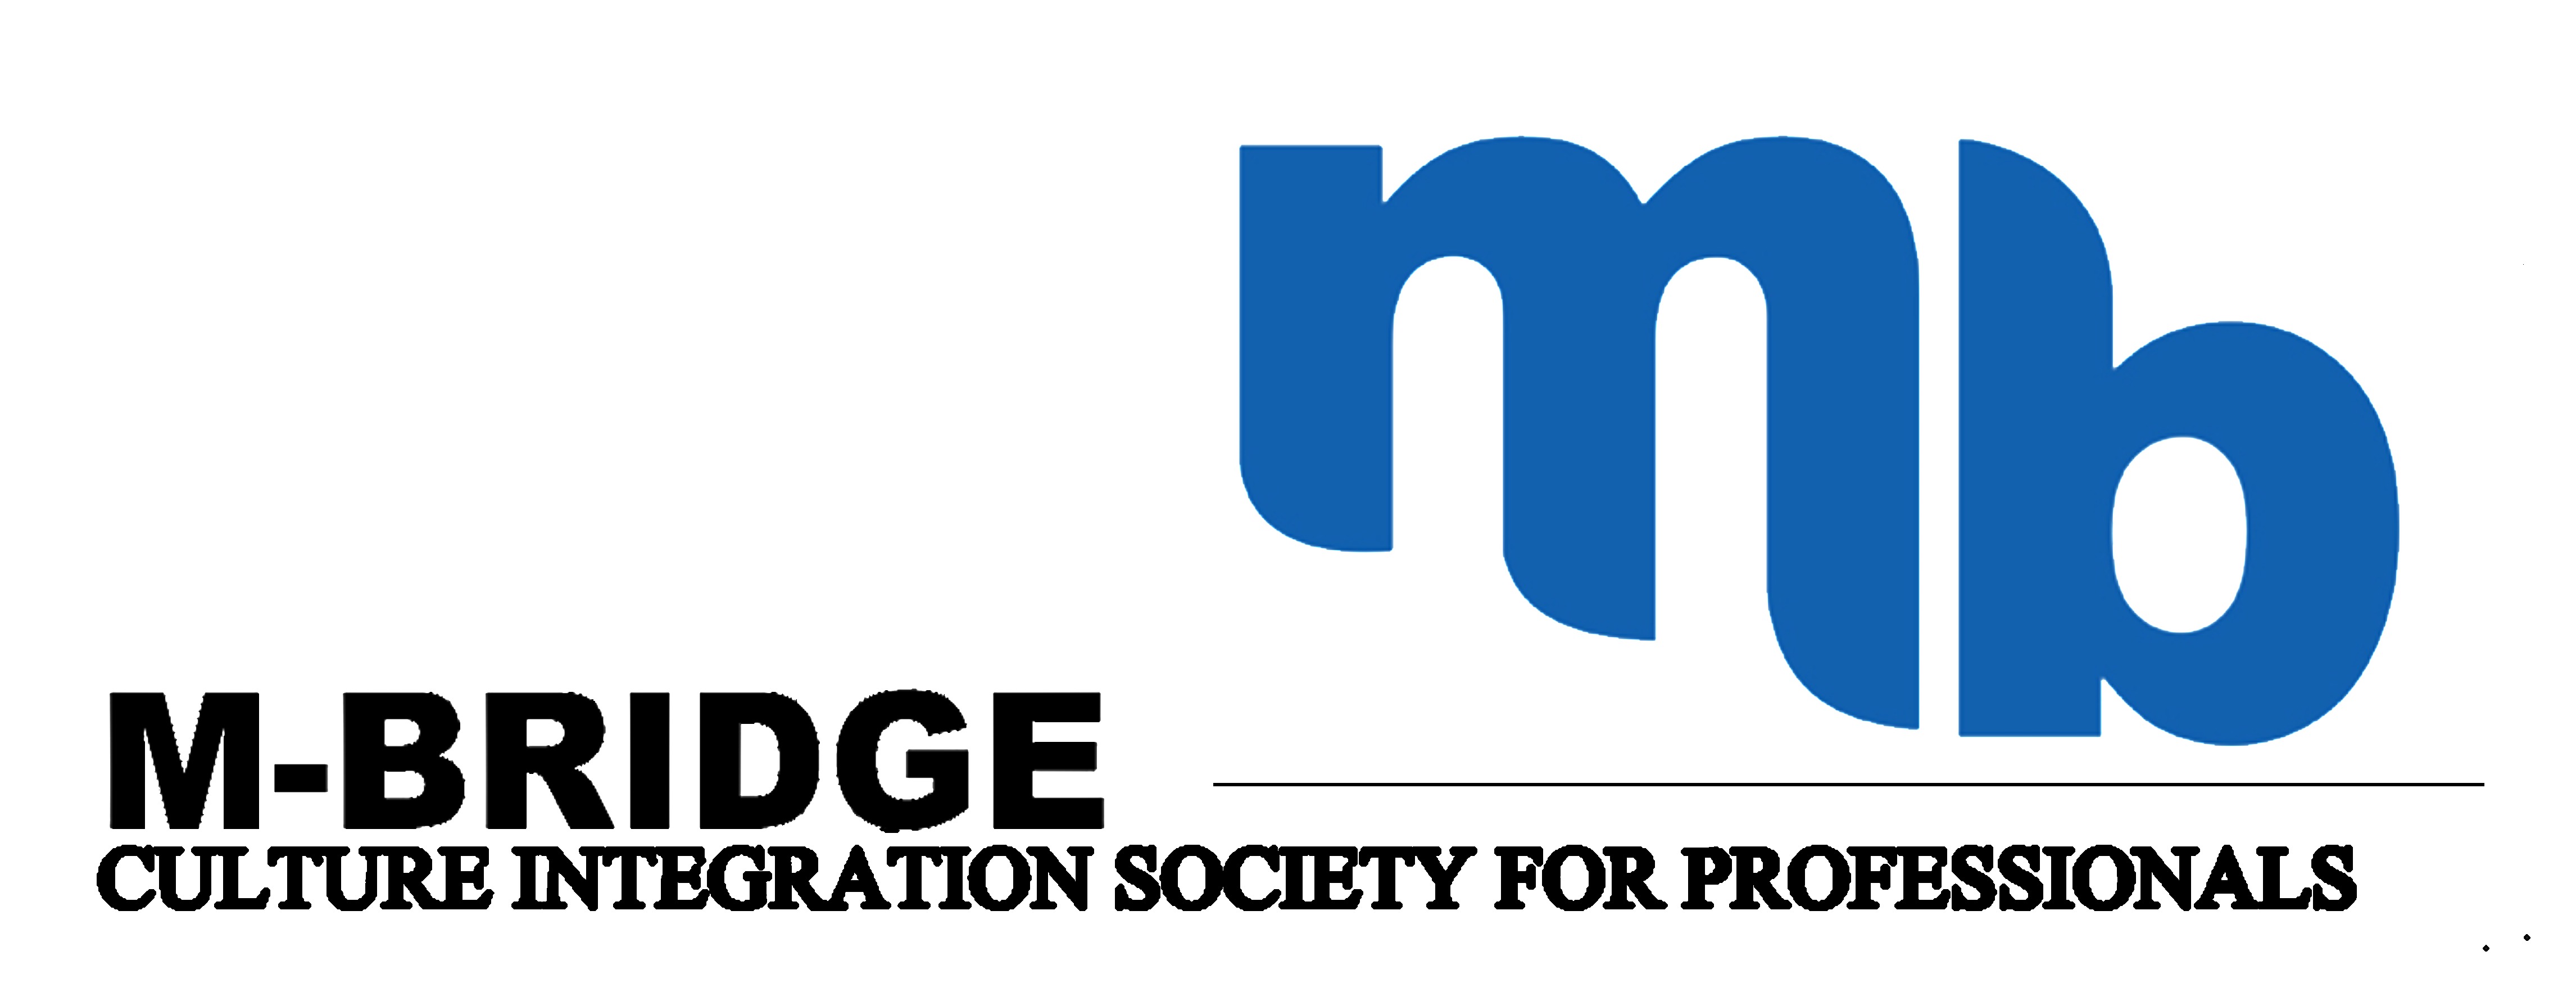 M-Bridge Integration Society for Professionals